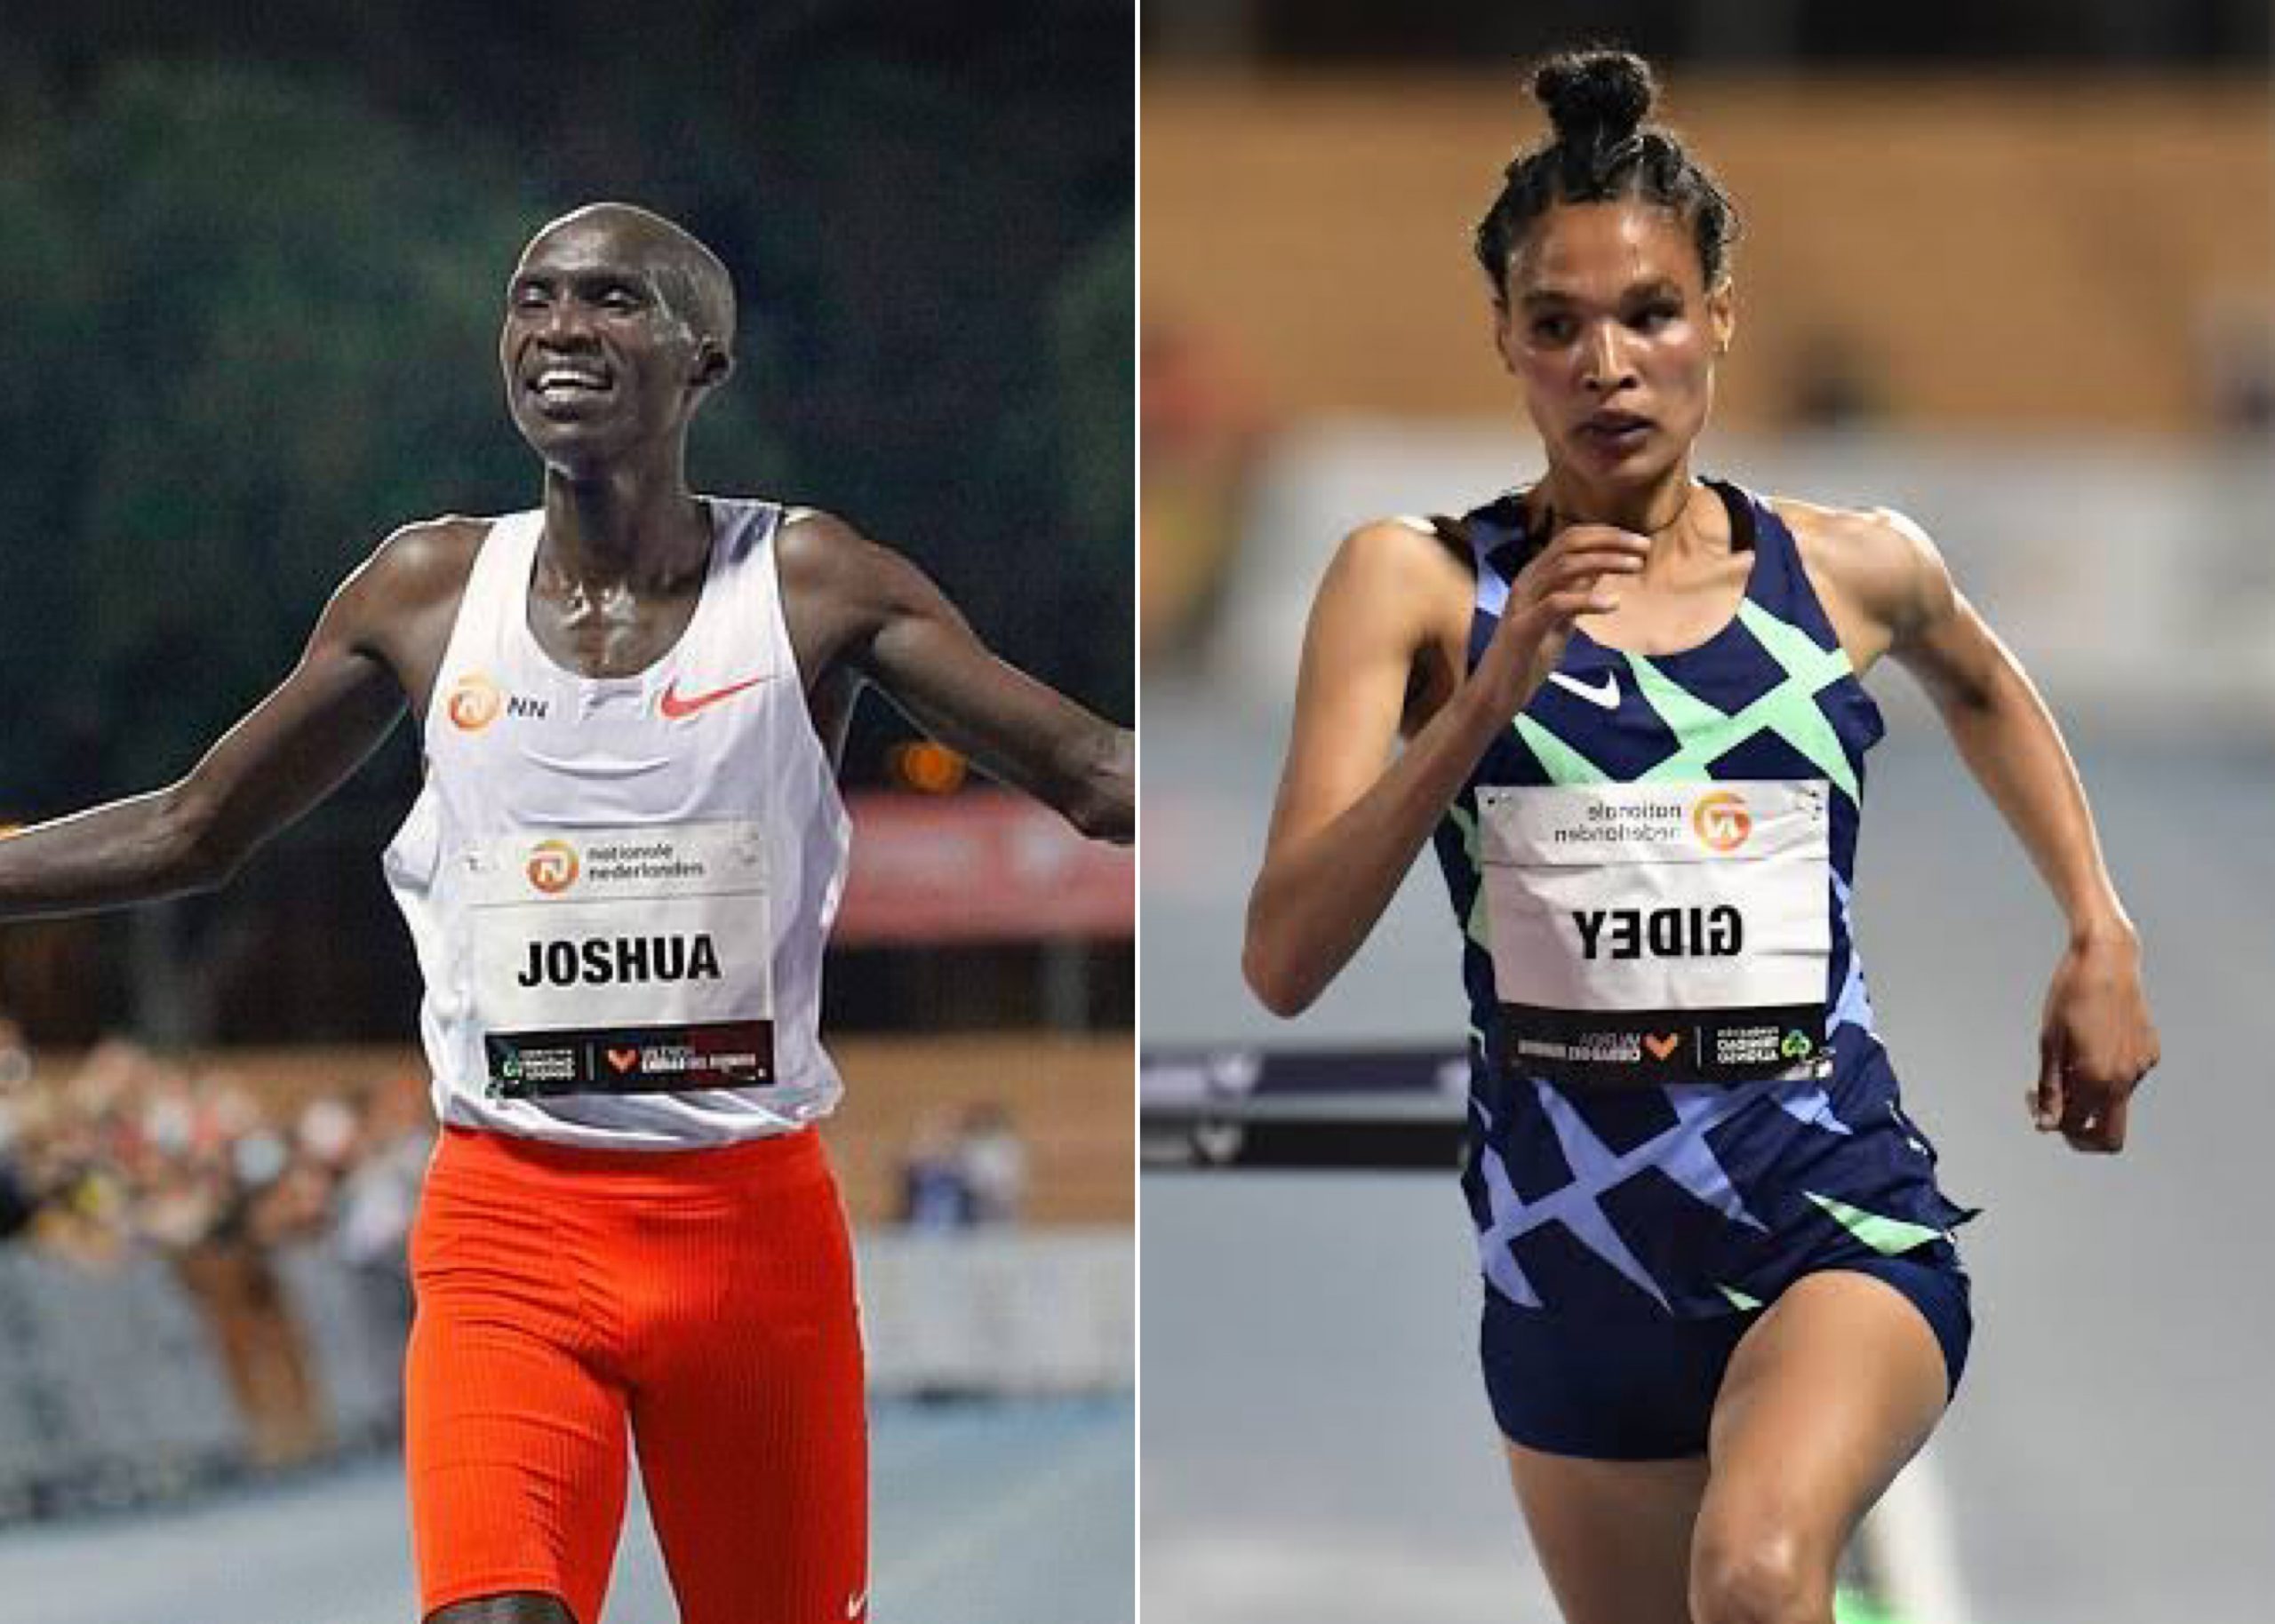 Uganda’s Joshua Cheptegei Breaks 10,000m Track World Record As Ethiopia’s Letesenbet Gidey Sets New Women's 5,000m Best